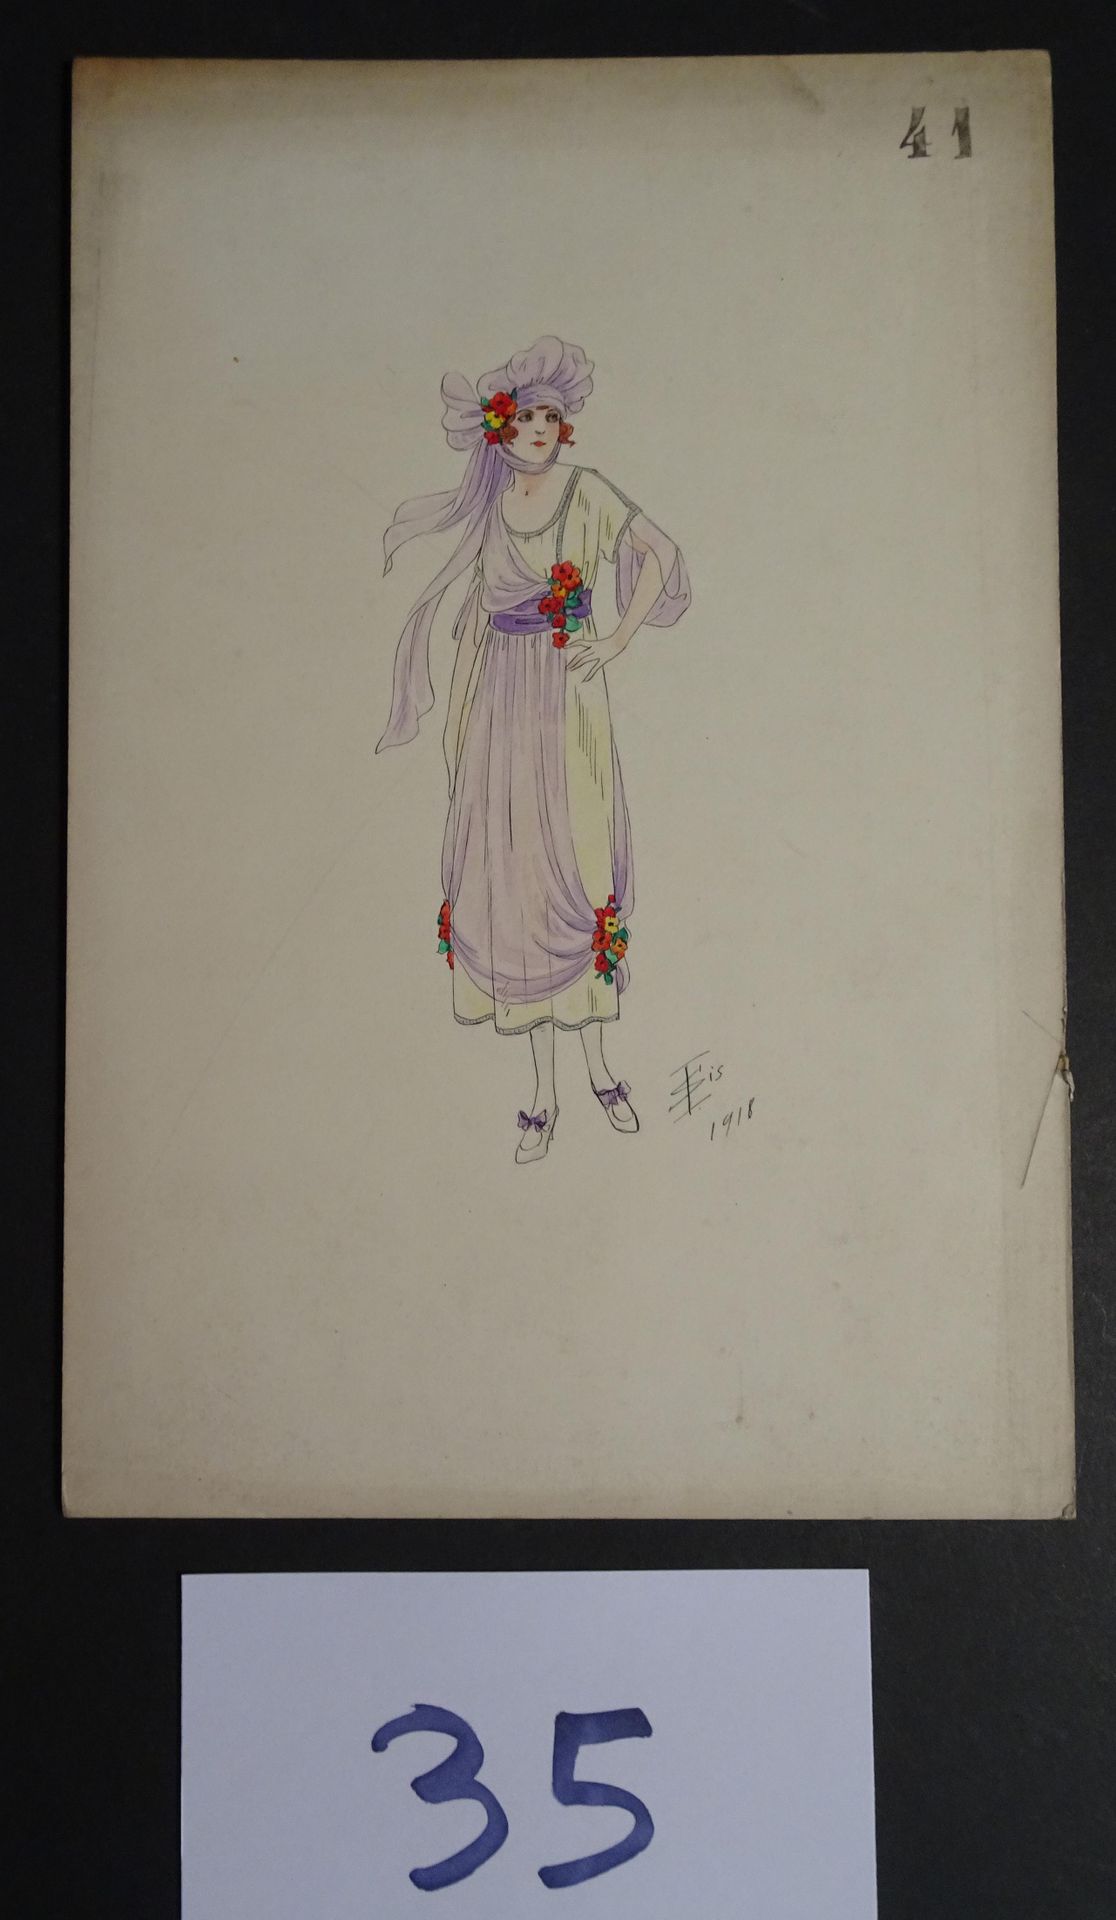 SOKOLOFF SOKOLOFF IGOR ( Anfang des 20. Jahrhunderts) 

"Frau mit violettem Klei&hellip;